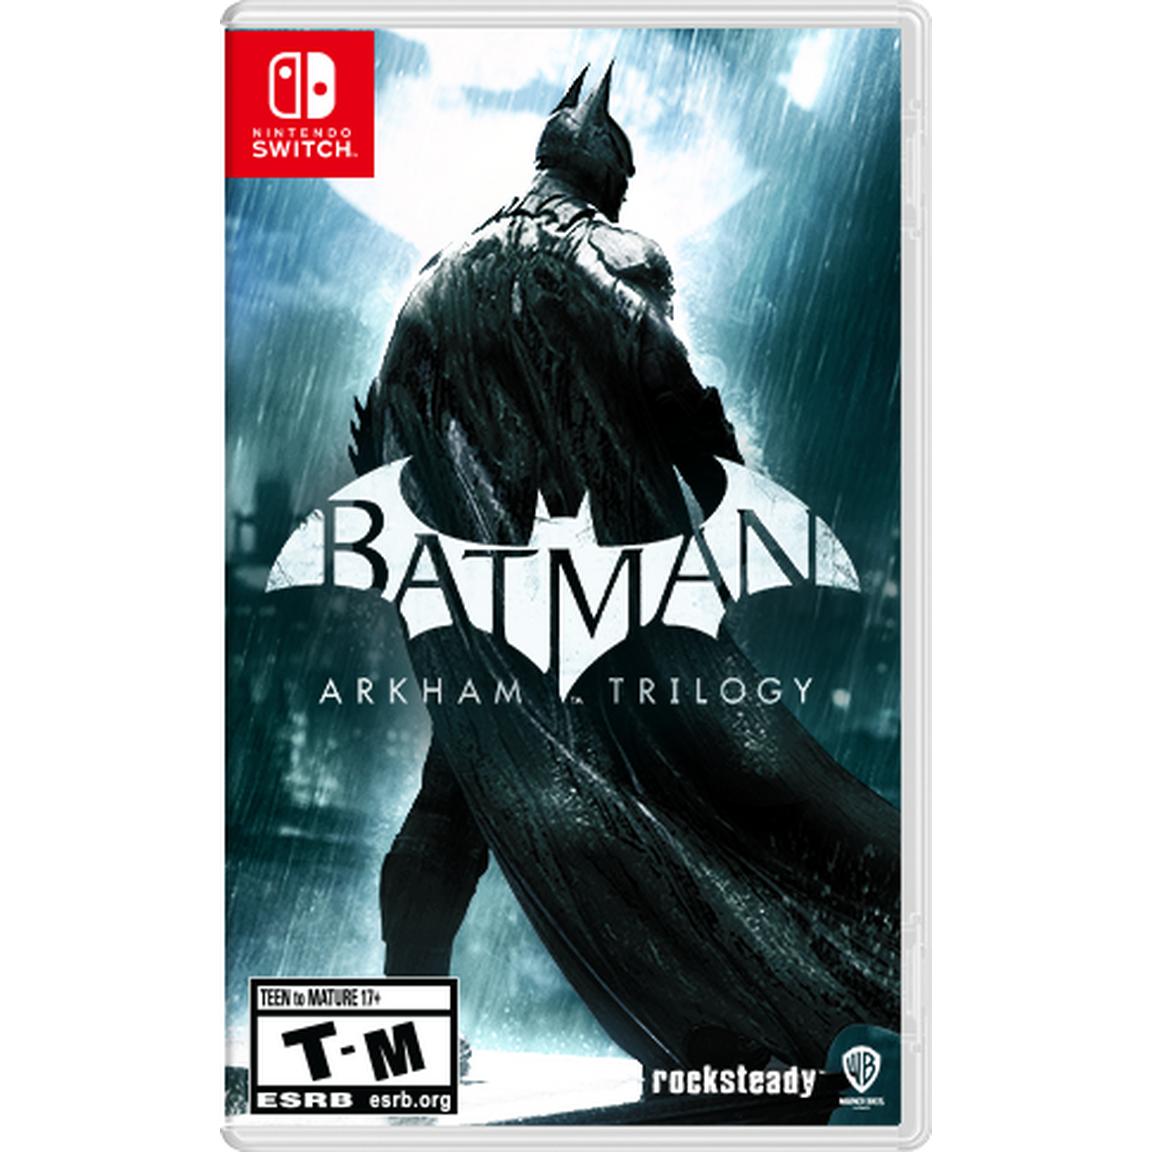 Batman: Arkham Origins getting gorgeous remaster